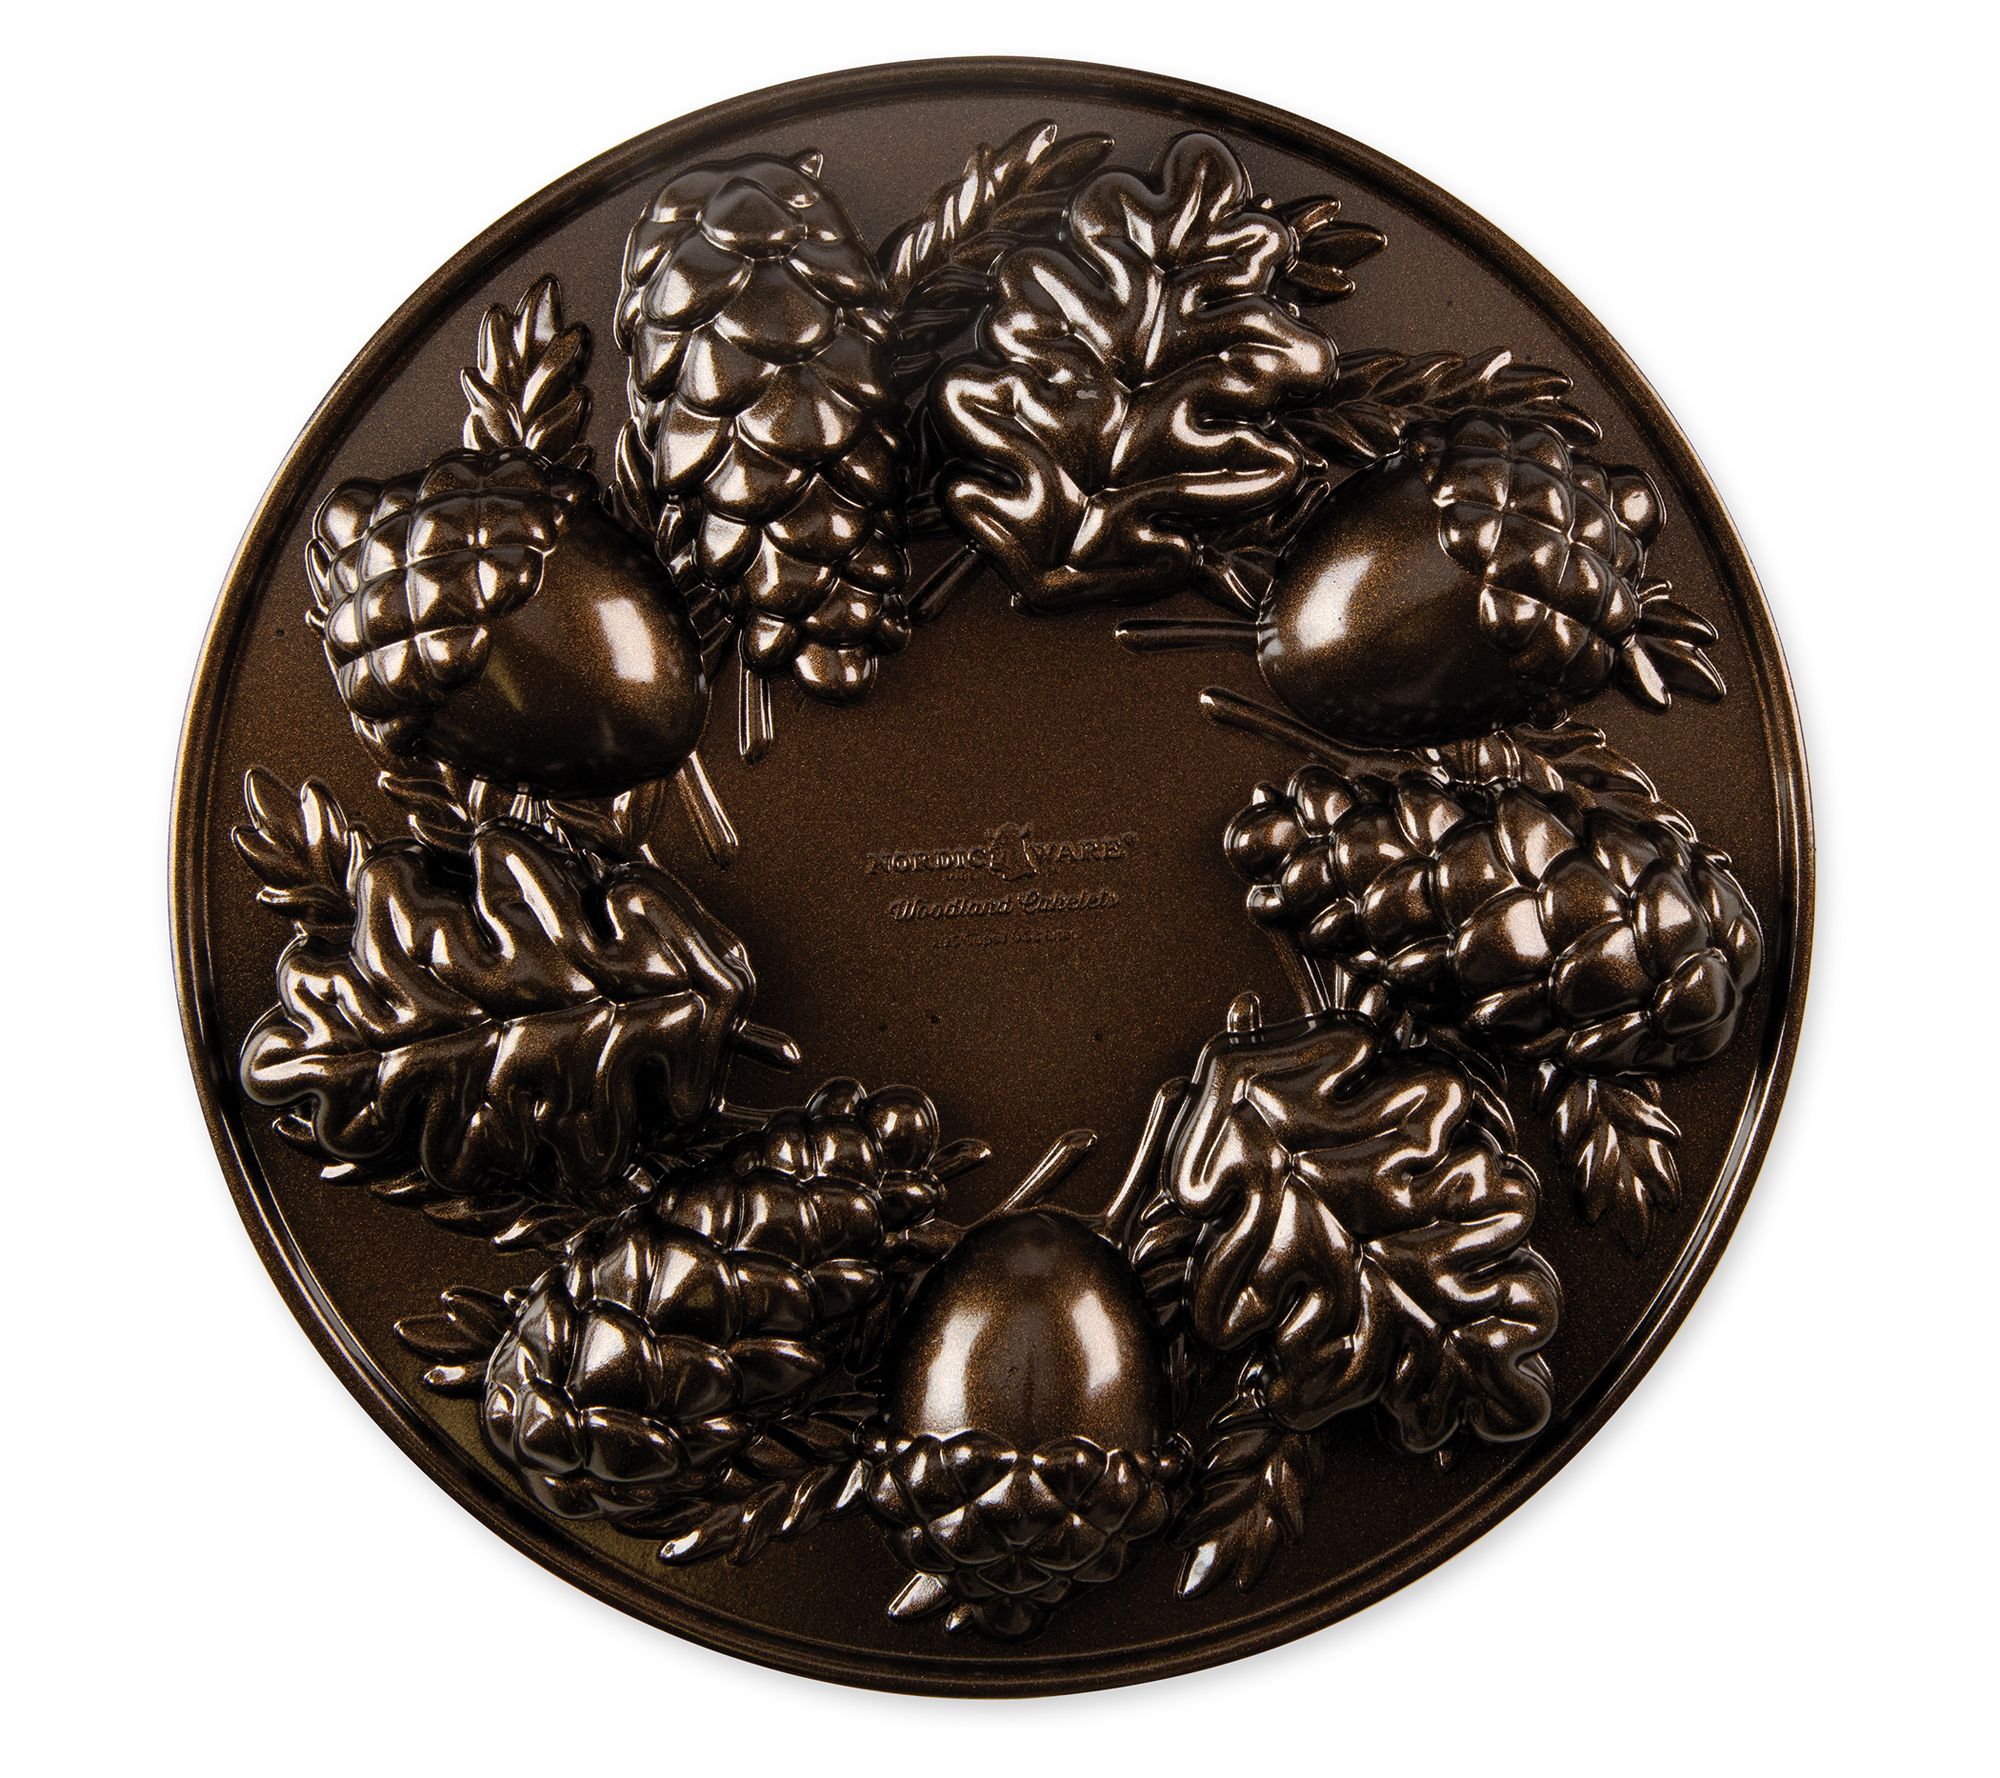 Nordic Ware Seasonal Collection Autumn Cakelet Pan - Brown 